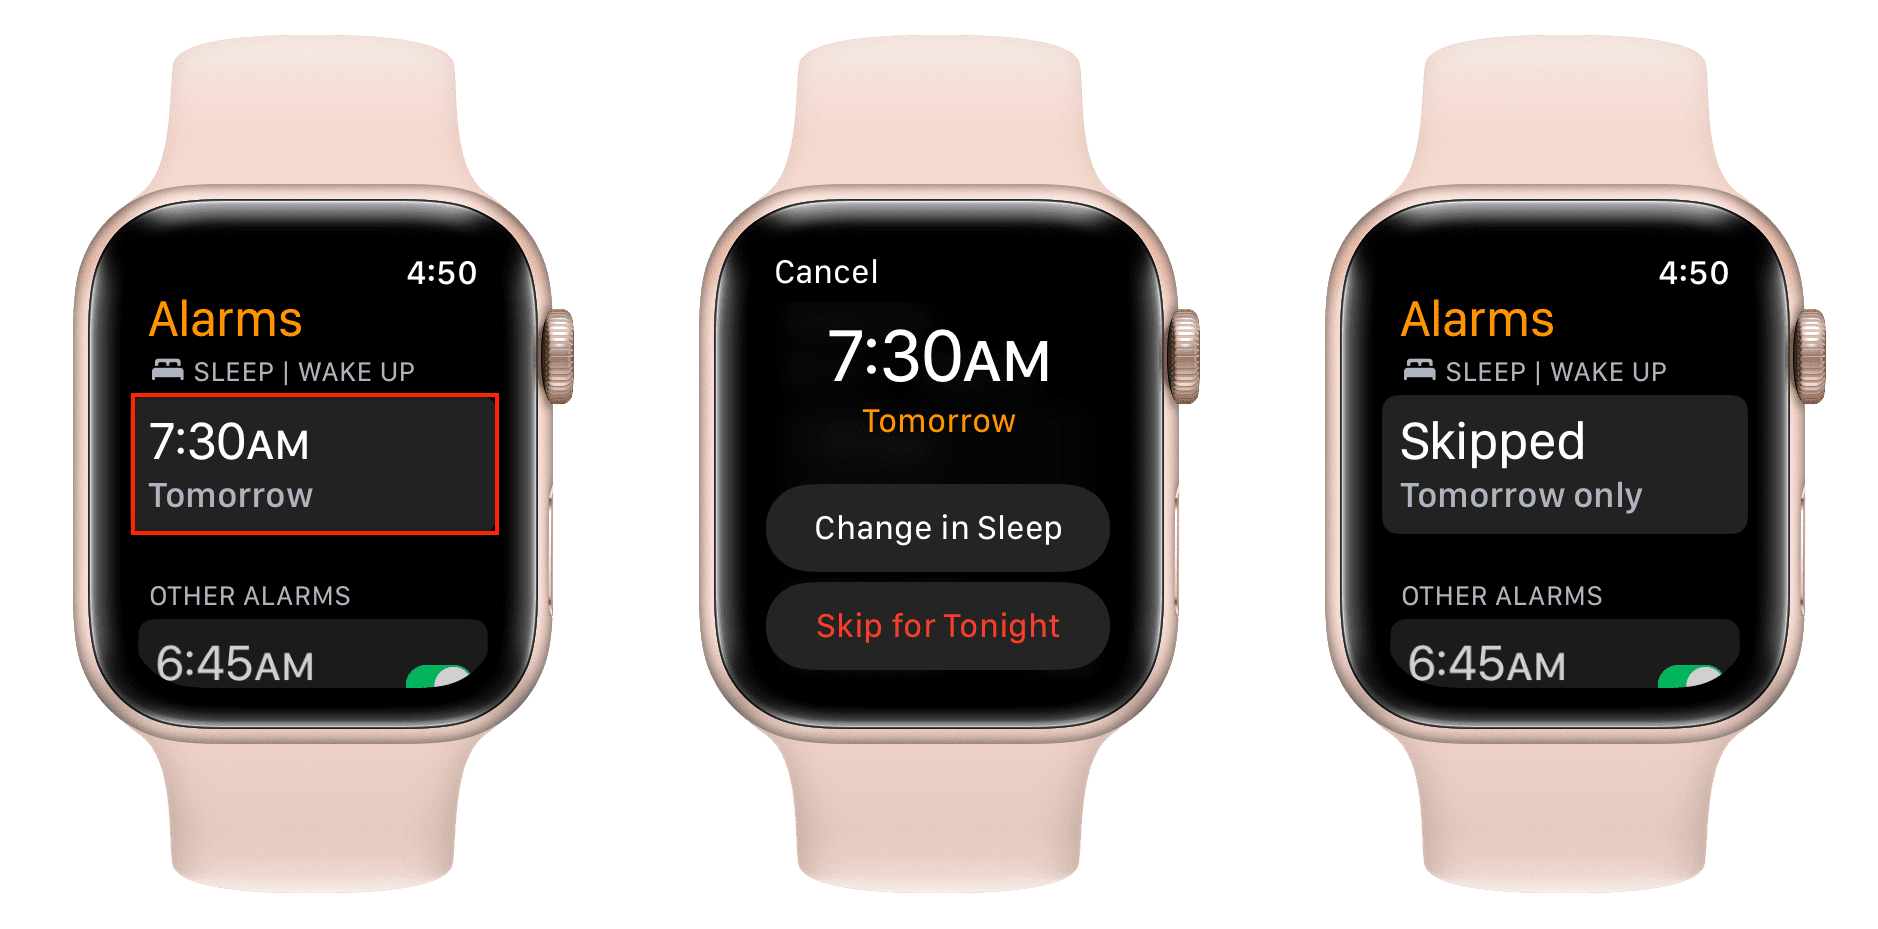 Skip Sleep Schedule wake-up alarm on Apple Watch